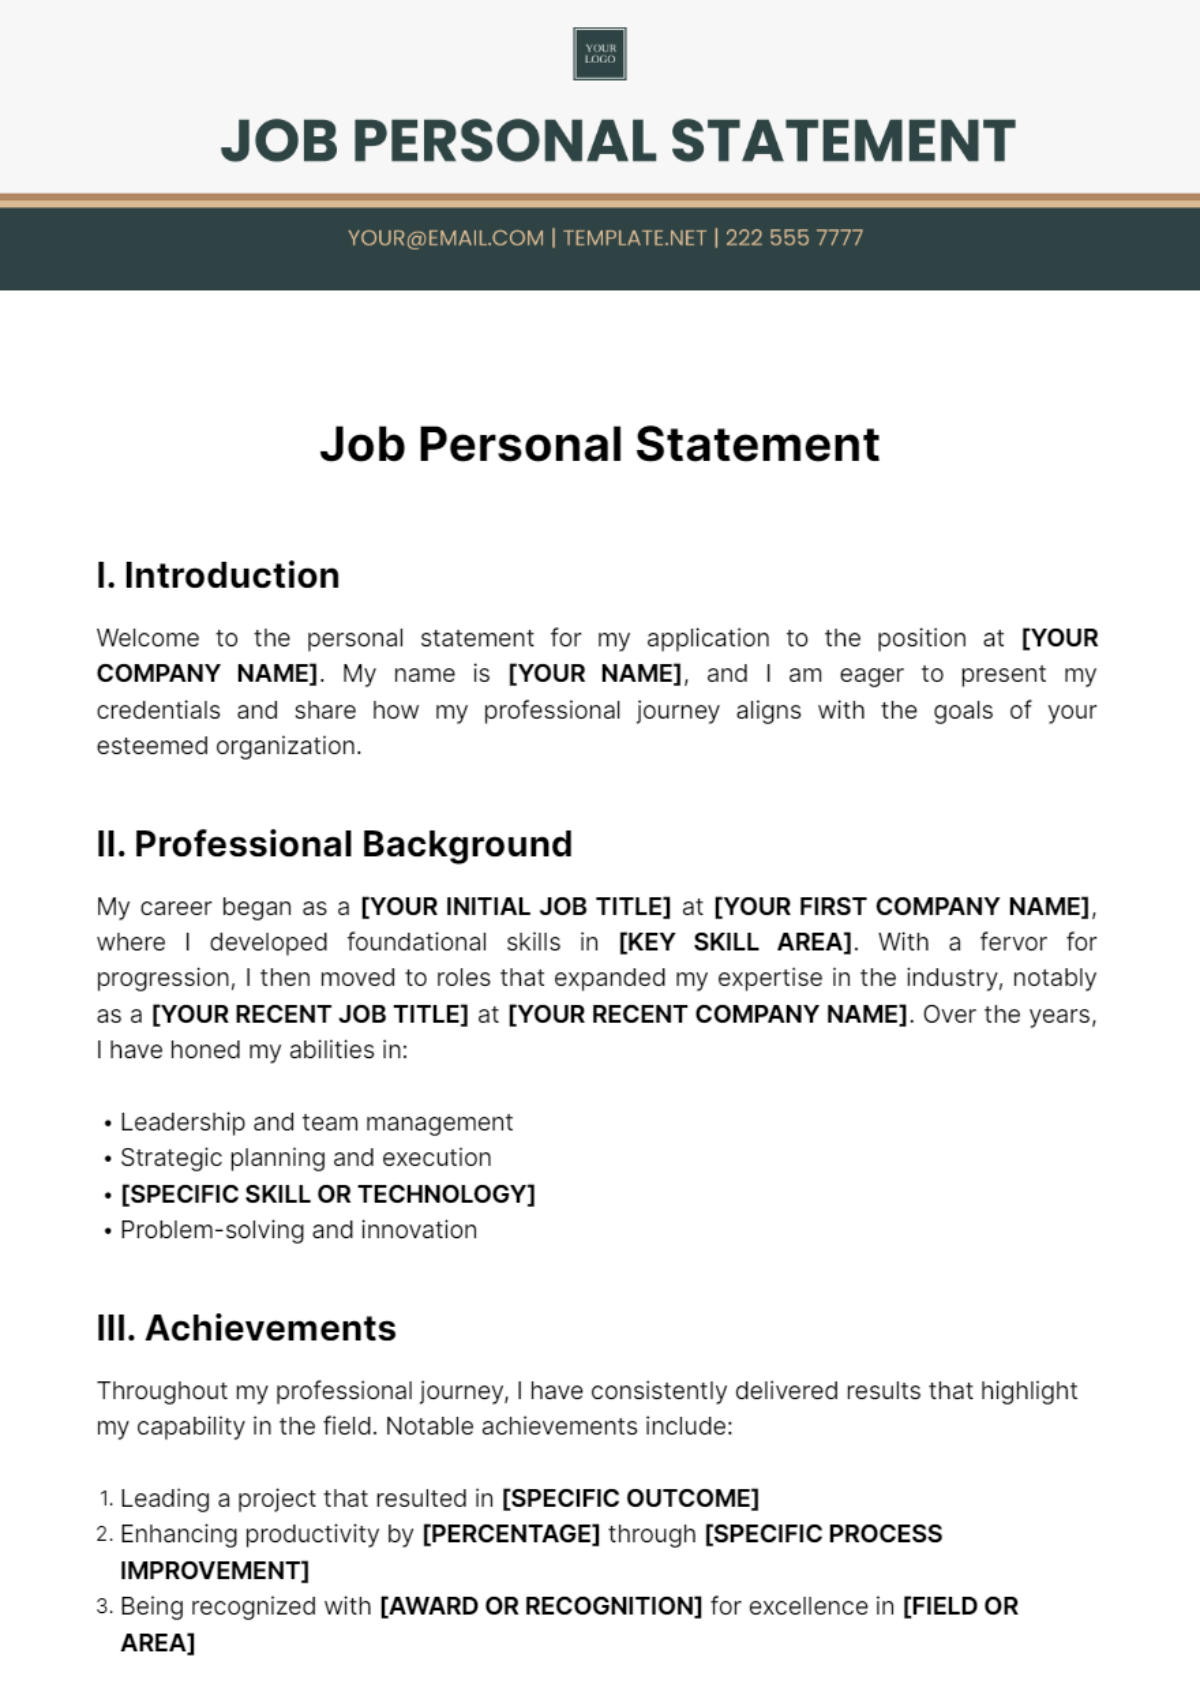 Job Personal Statement Template